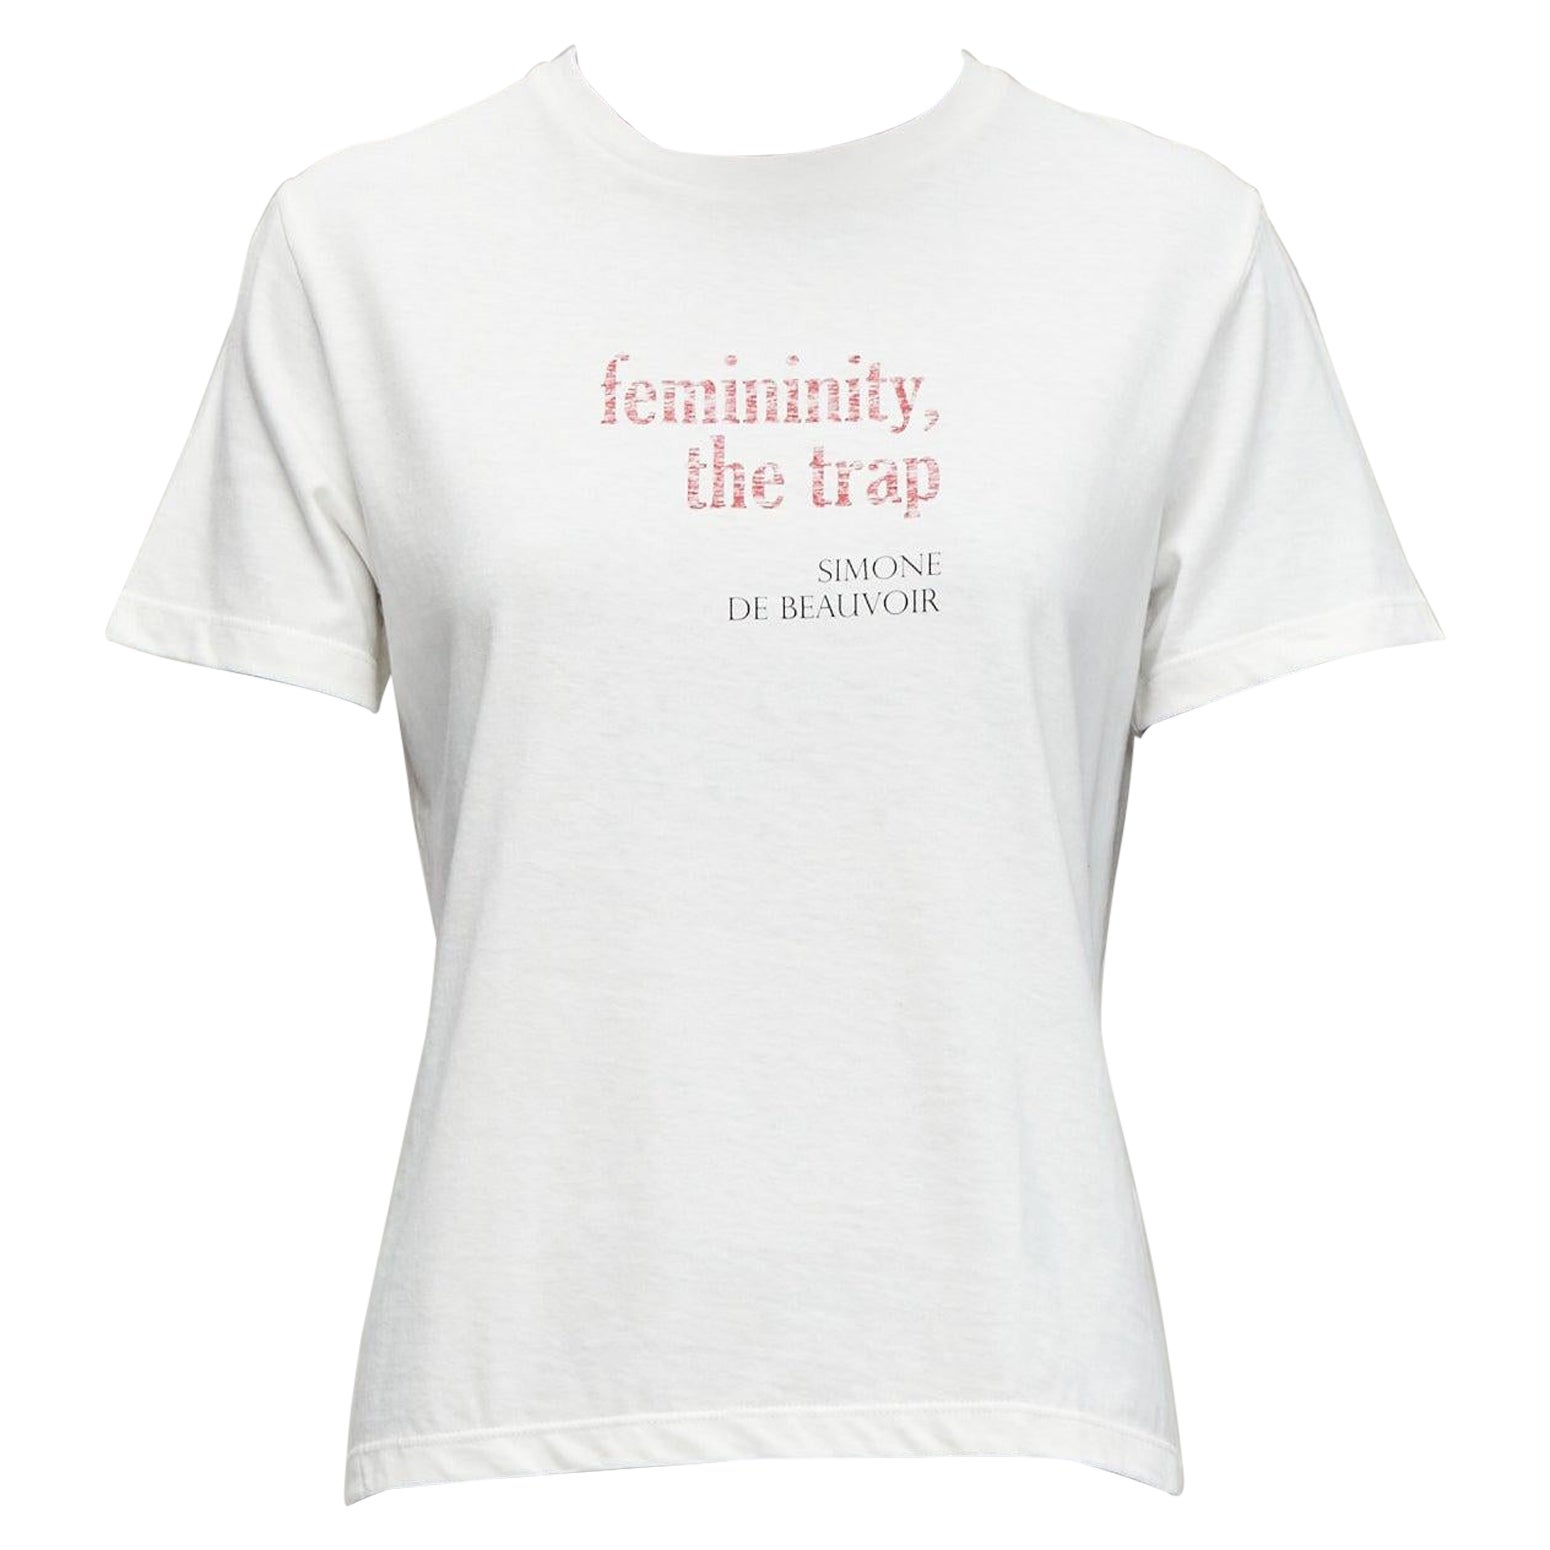 DIOR Feminity The Trap Simone De Beauvoir print white cotton linen tshirt XS For Sale